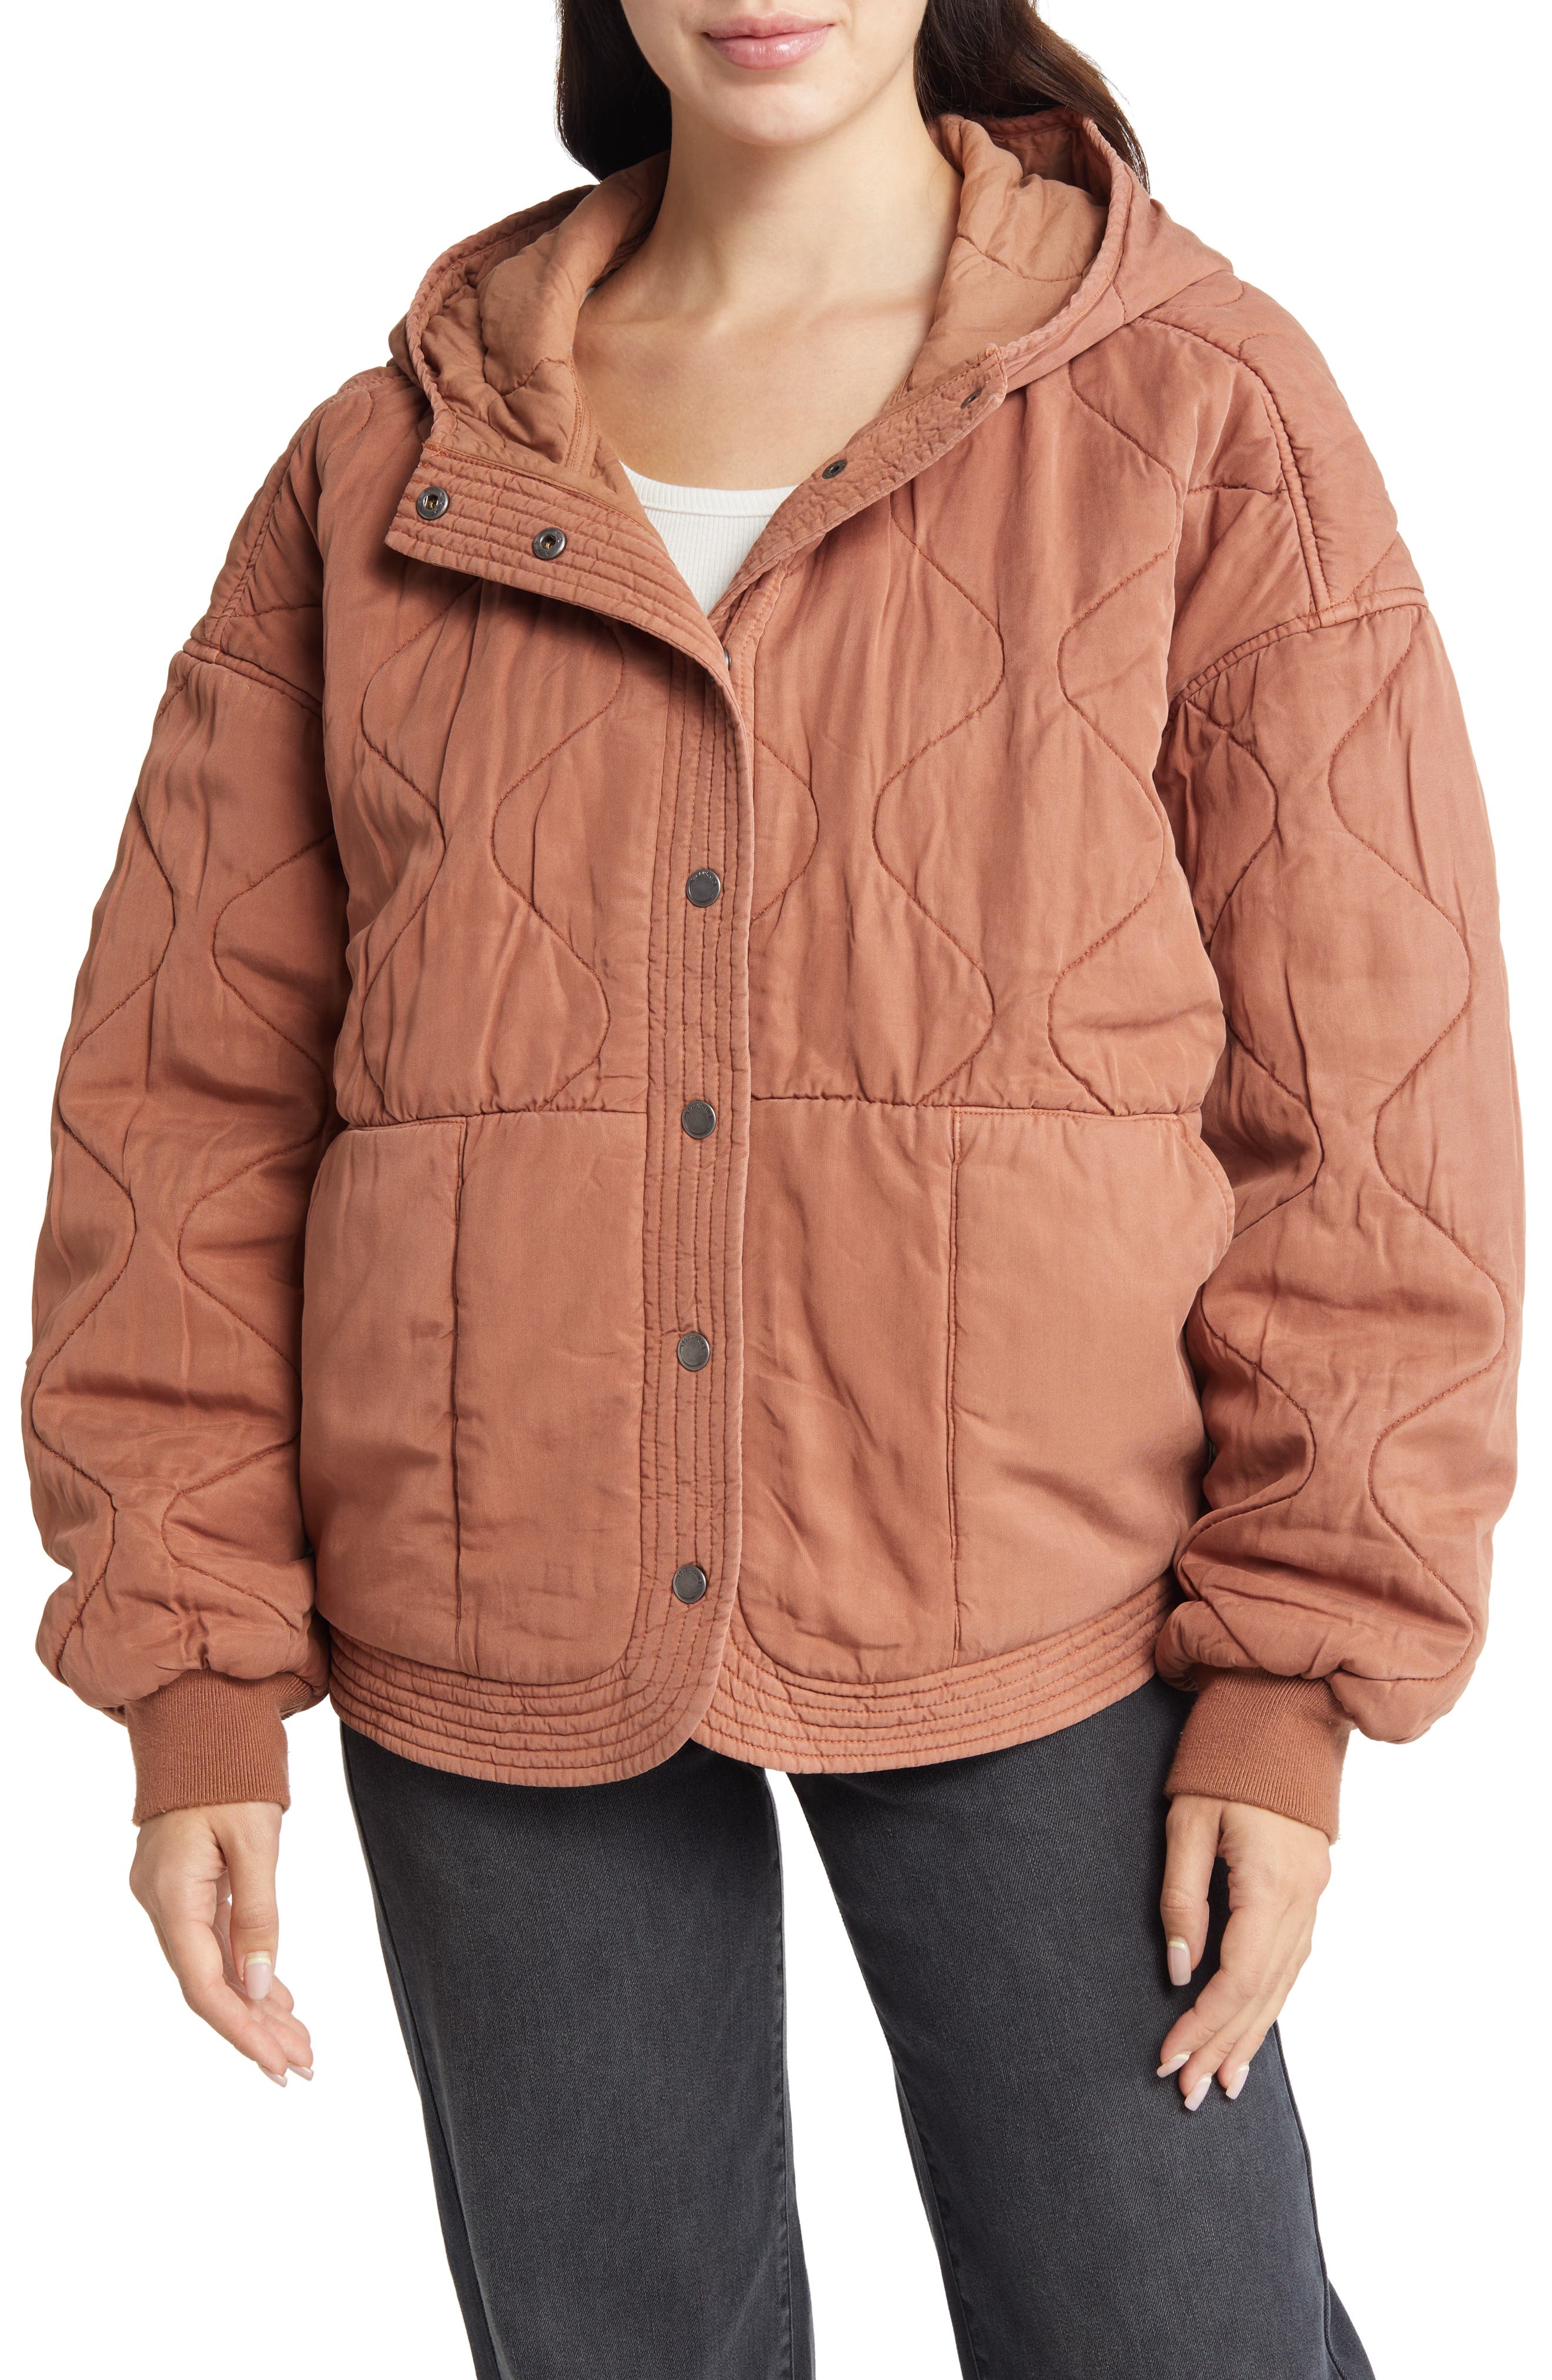 BALEAF Womens Ultra Lightweight Full-Zip Warm Quilted Puffer Jacket Cotton Filling Winter Coat 